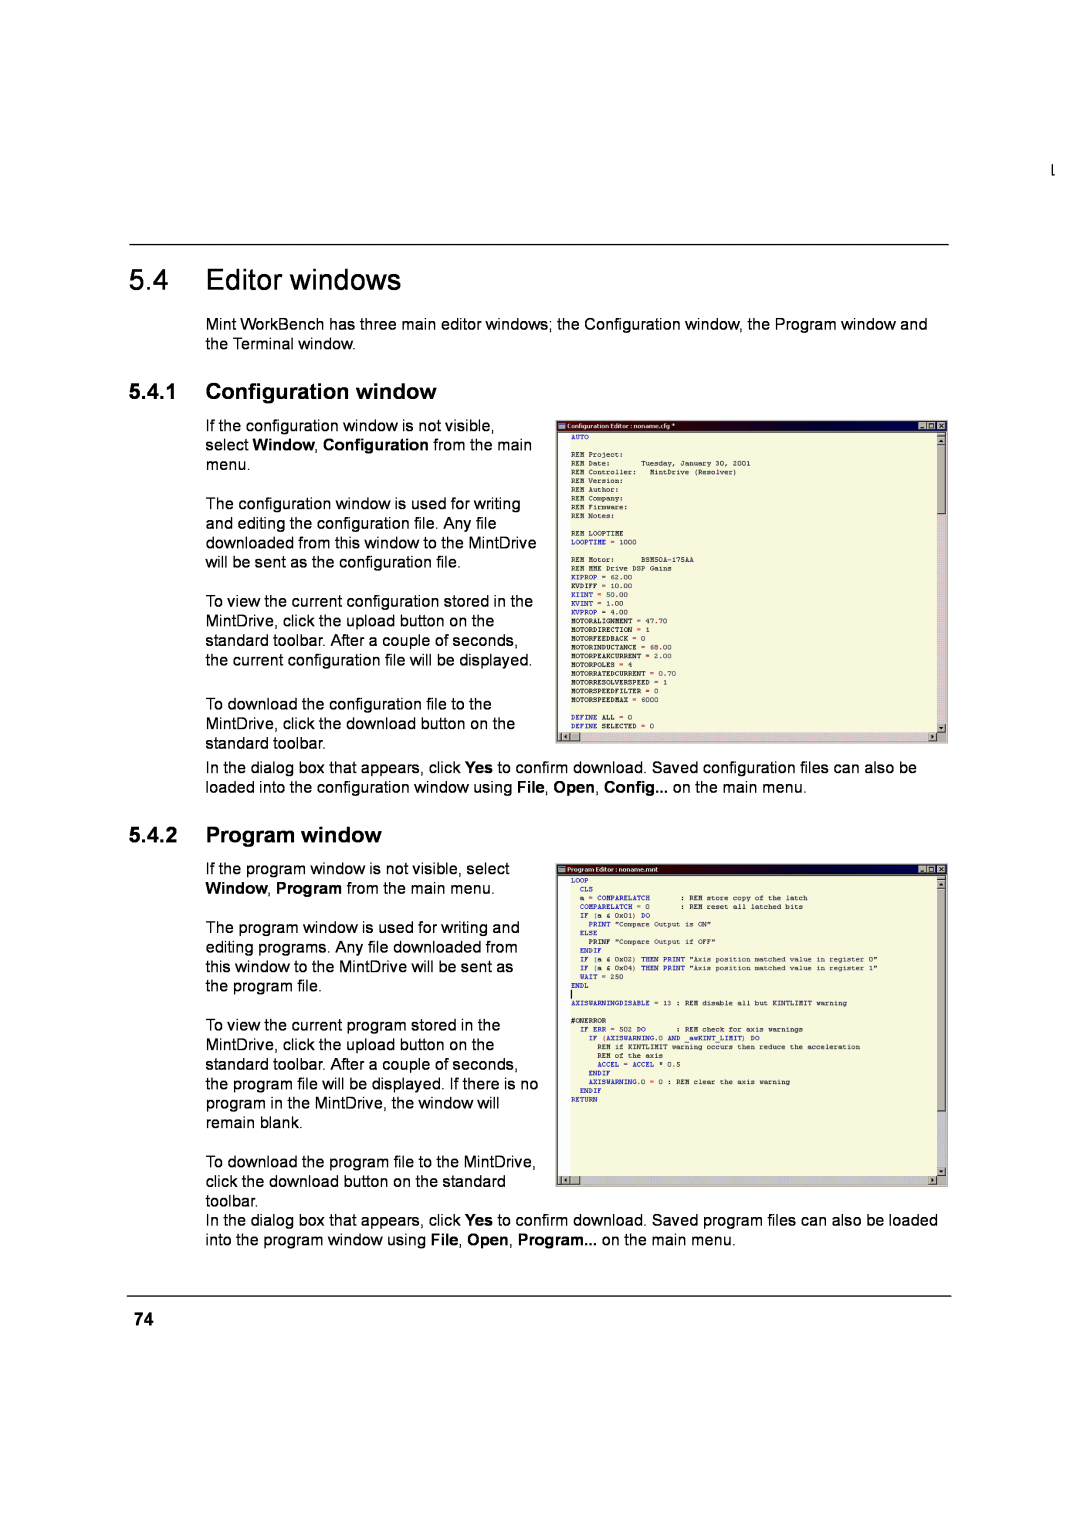 Baldor MN1274 06/2001 installation manual Editor windows, Configuration window, Program window 